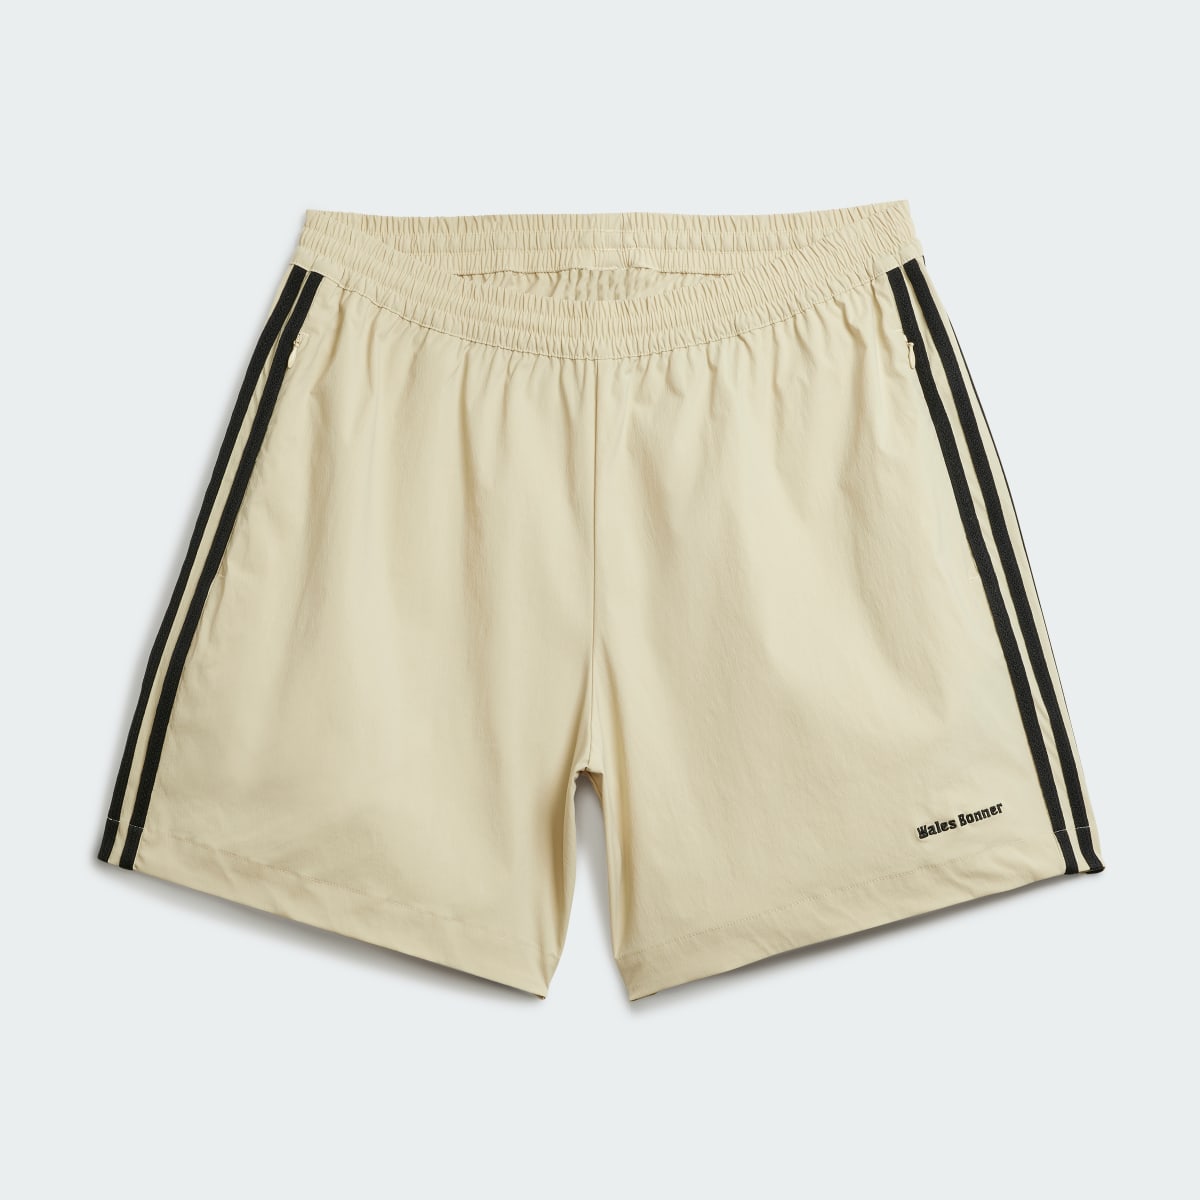 Adidas Statement Football Shorts. 4